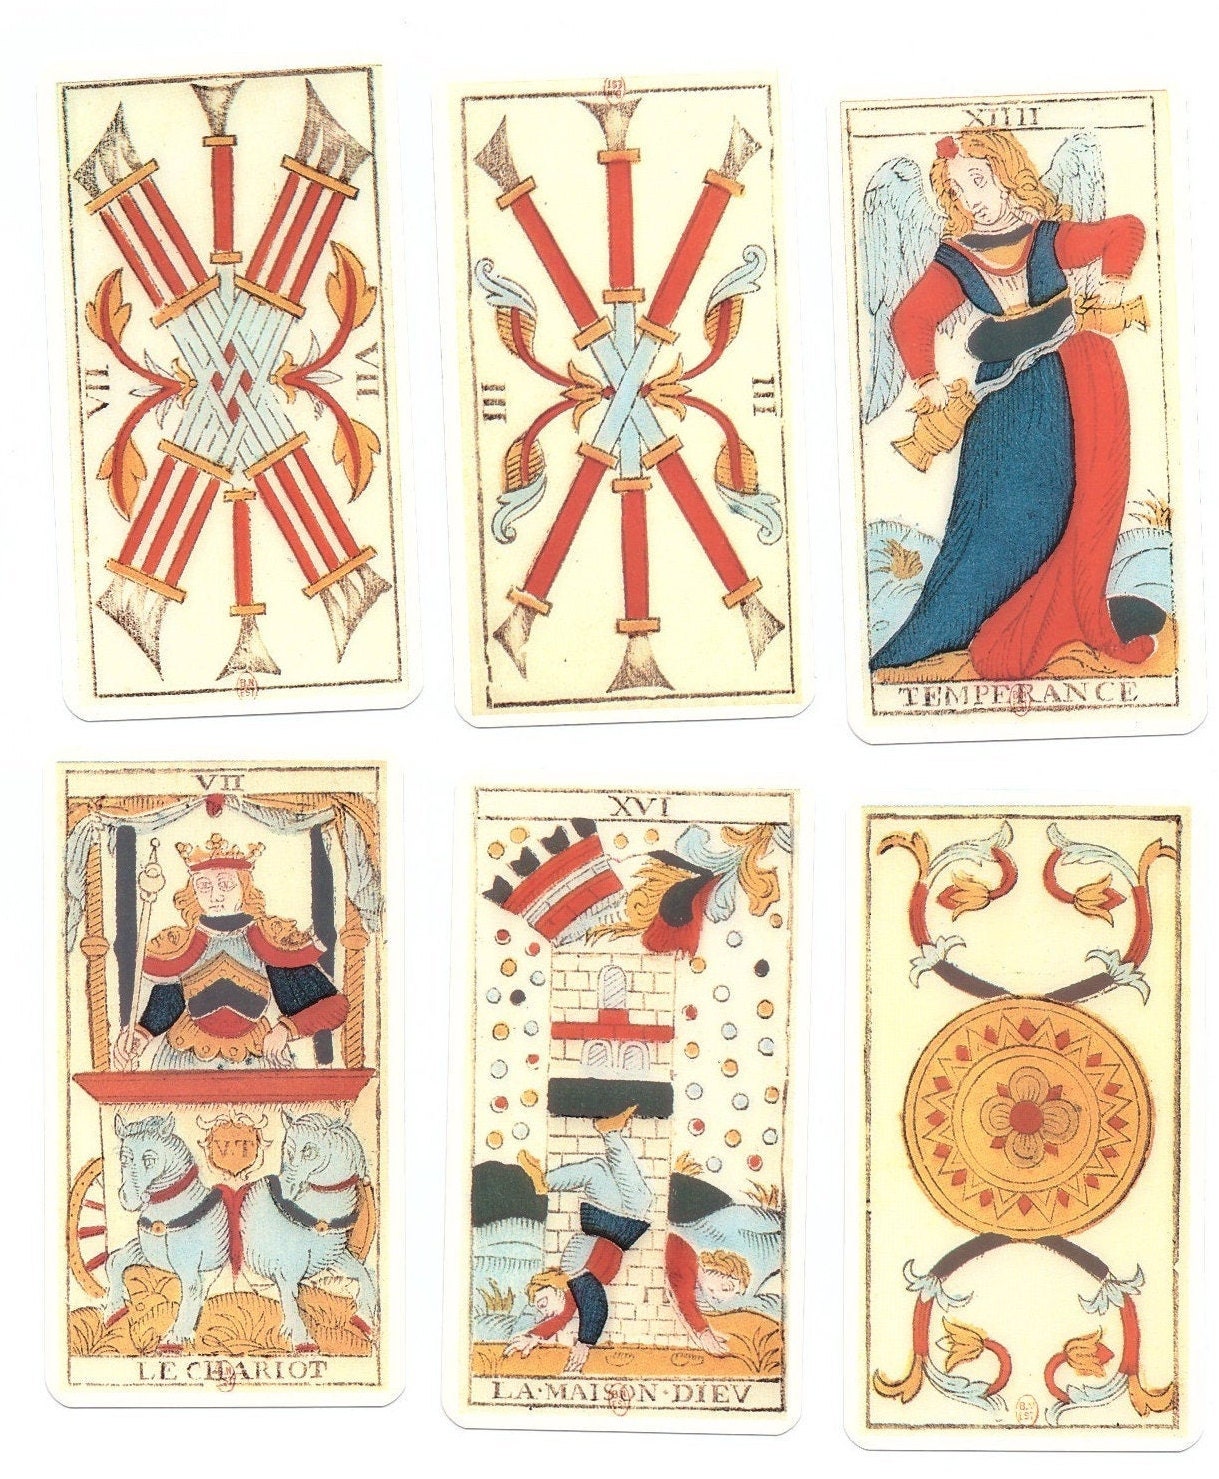 PDF Tarot Card Backside, Blank Tarot Card IMAGE FILE 